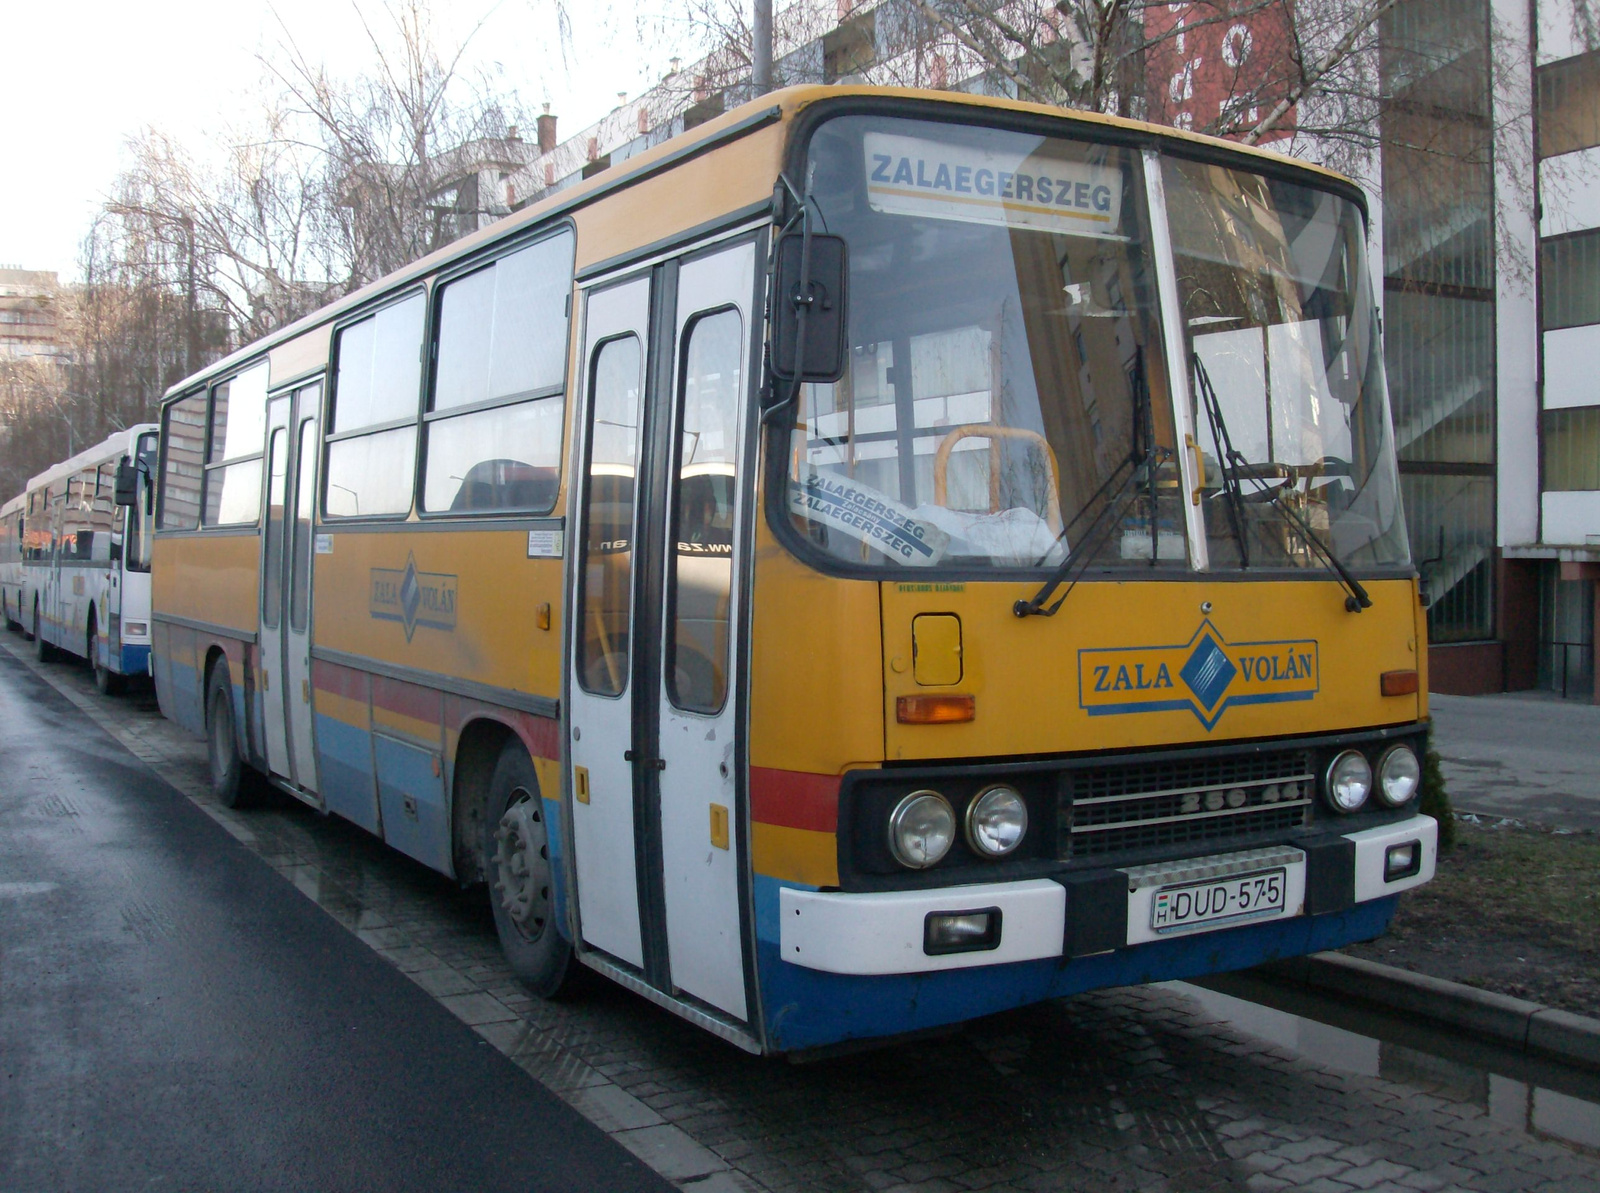 DUD-575 Zalaegerszeg